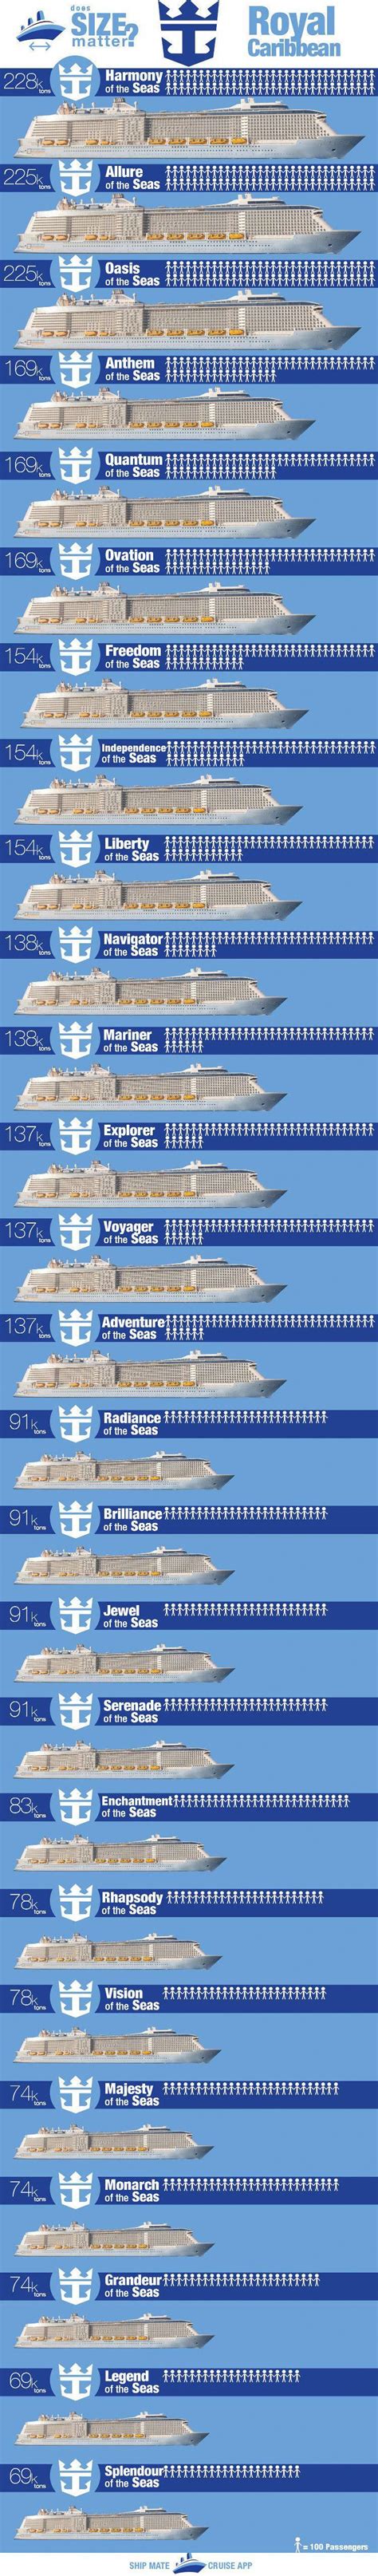 Royal Caribbean Ship Size Chart